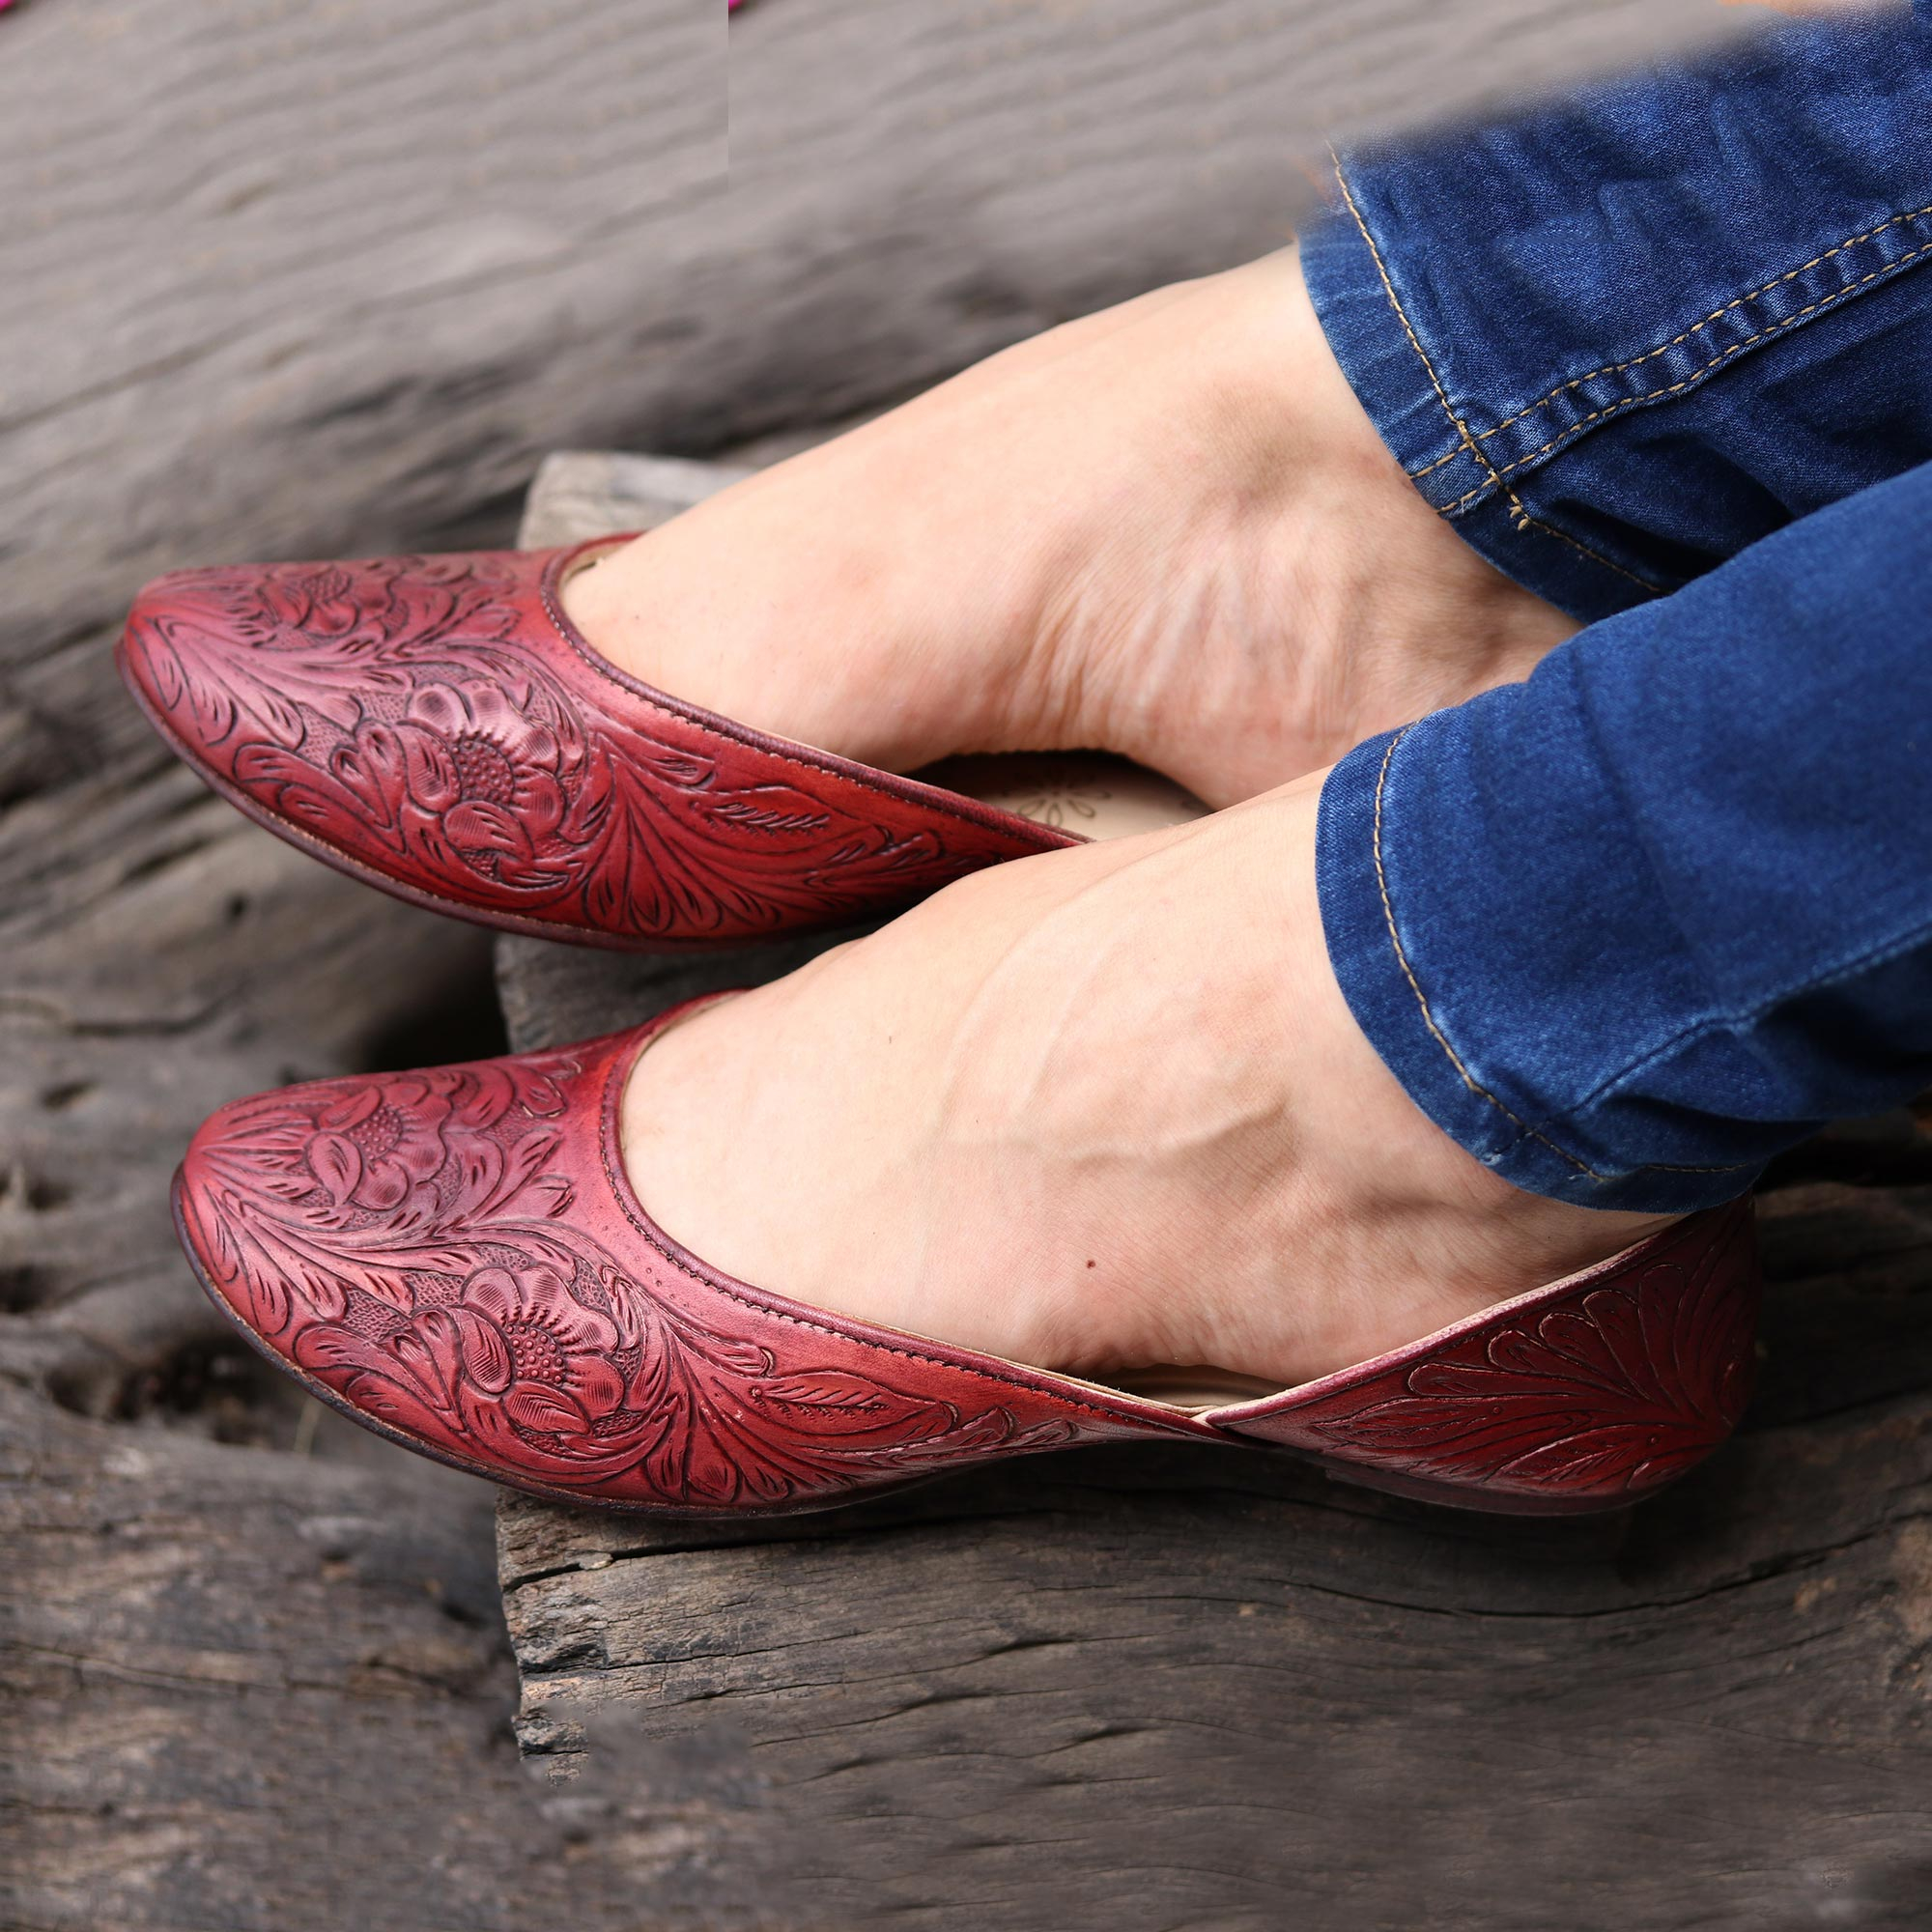 Floral Leather Jutti Shoes in Burgundy from India - Taj Mahal Burgundy |  NOVICA